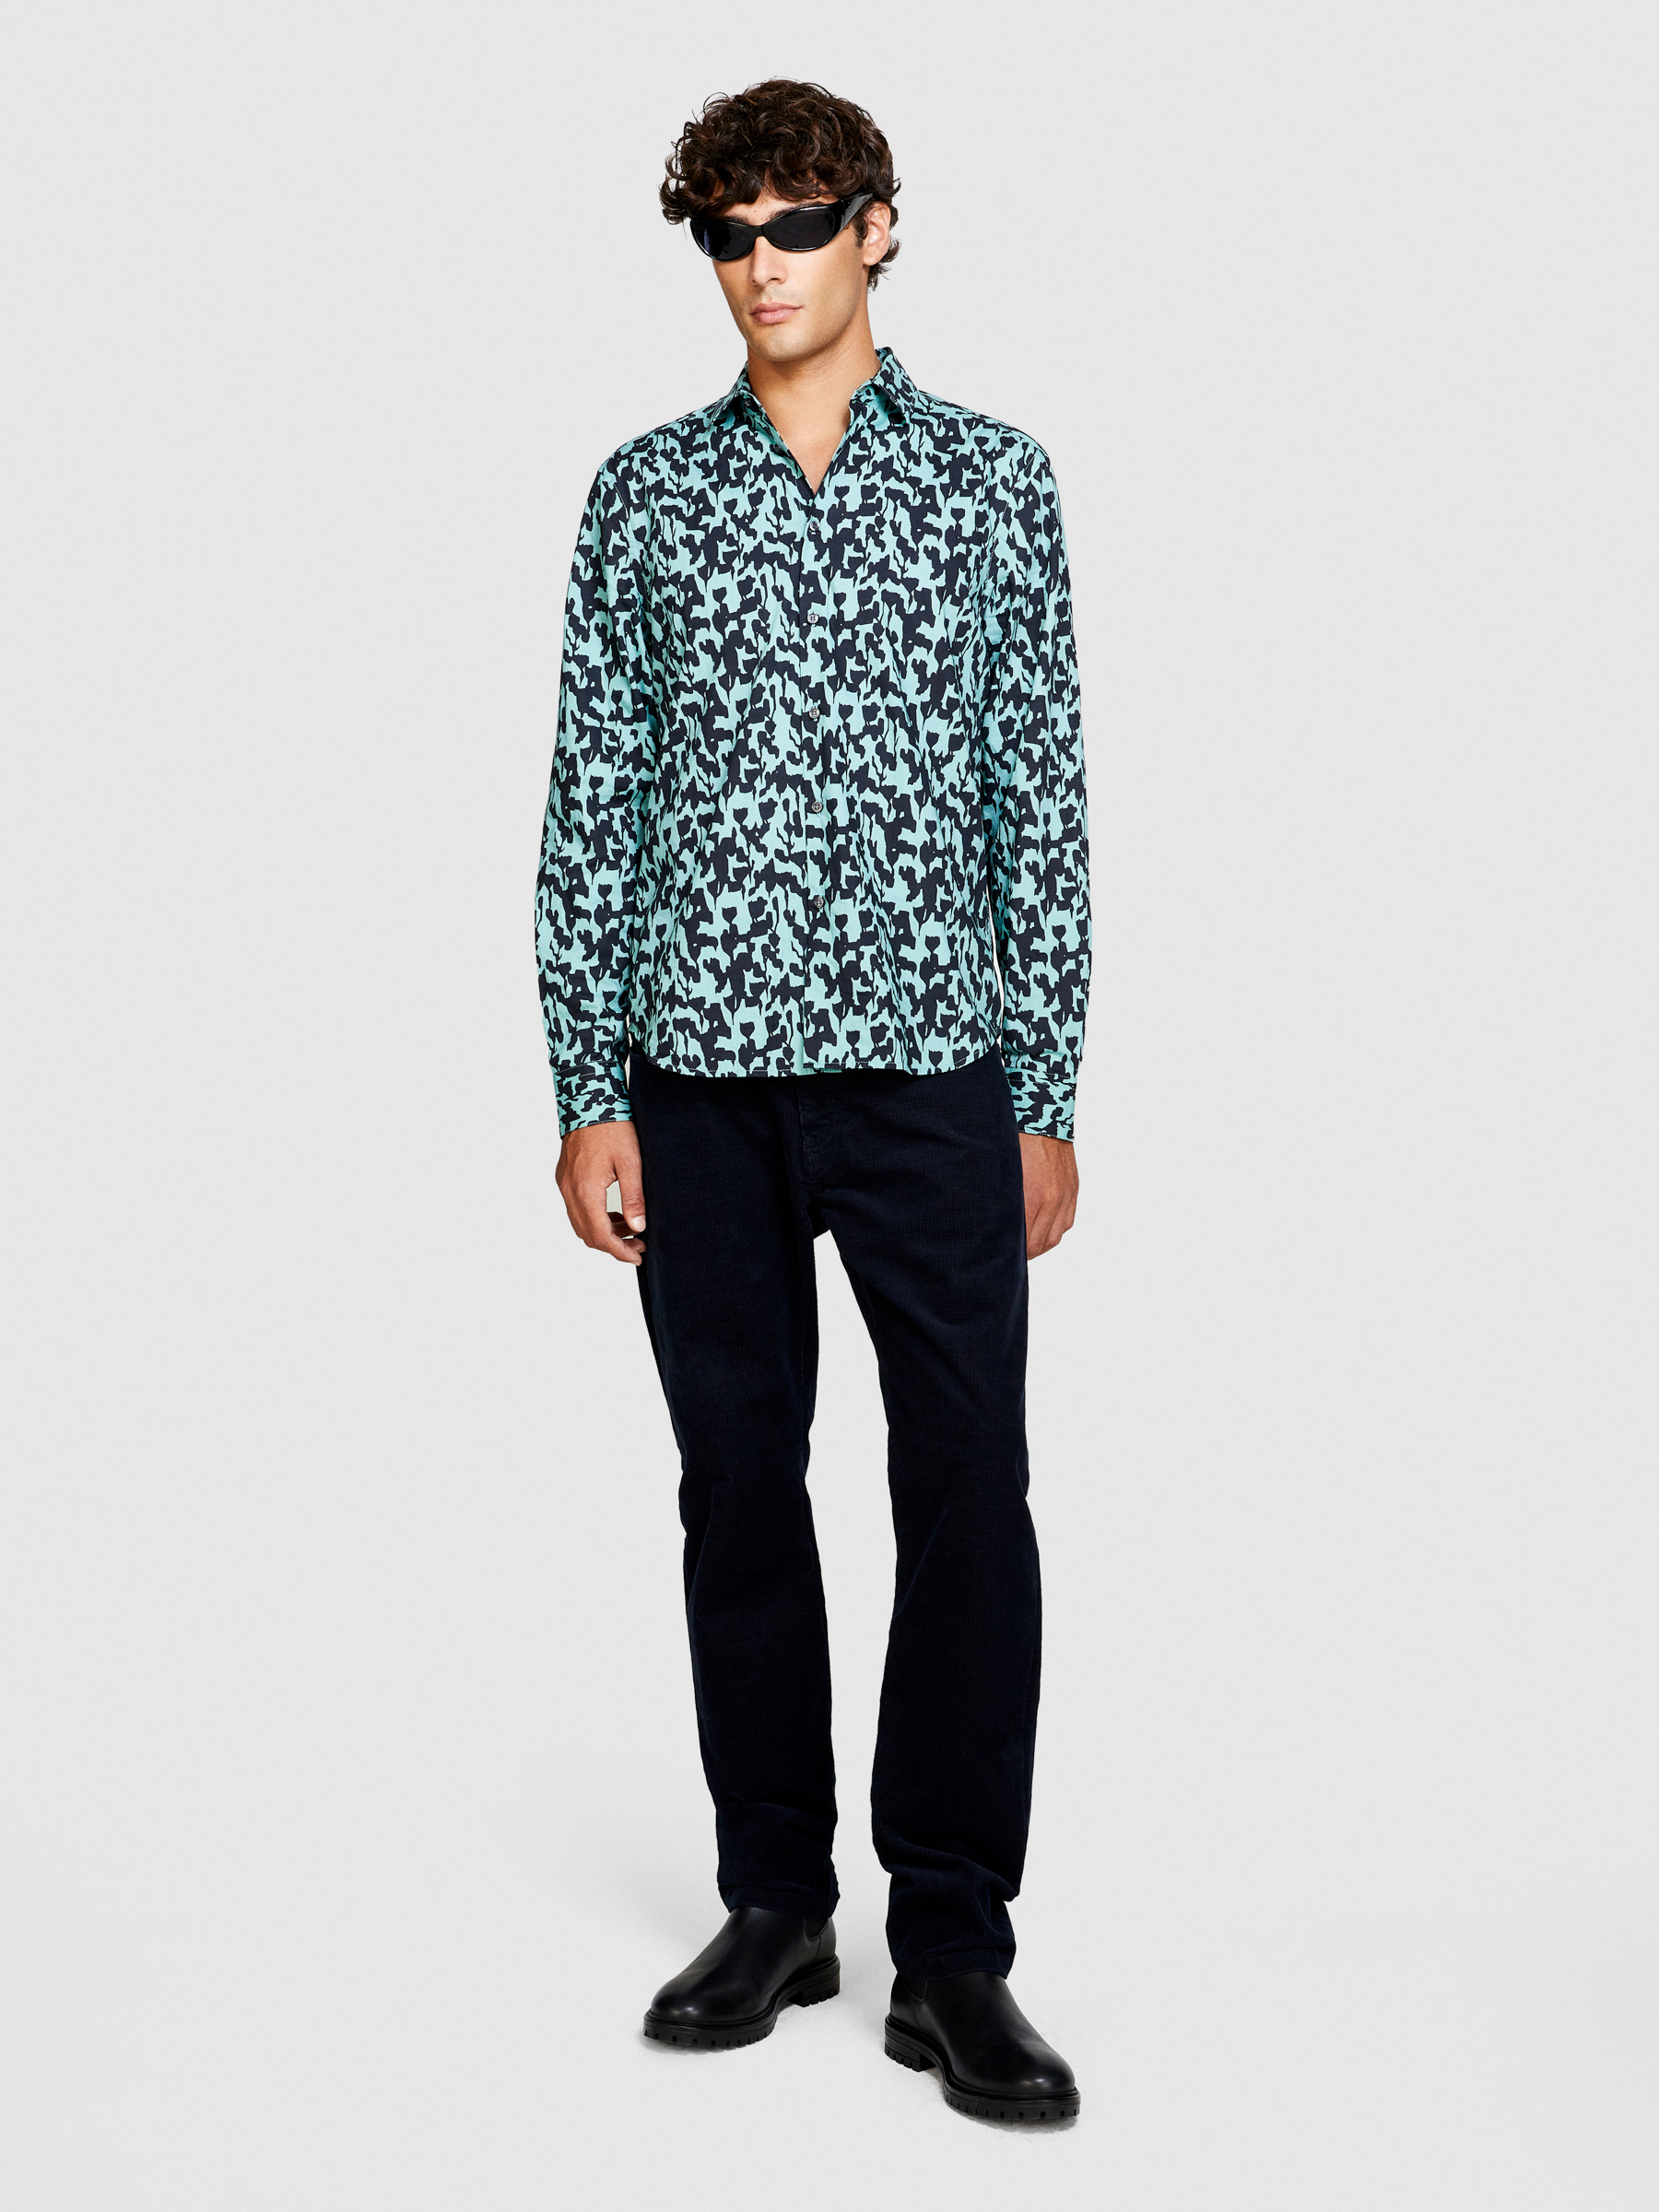 Sisley - Printed Shirt, Man, Turquoise, Size: XL